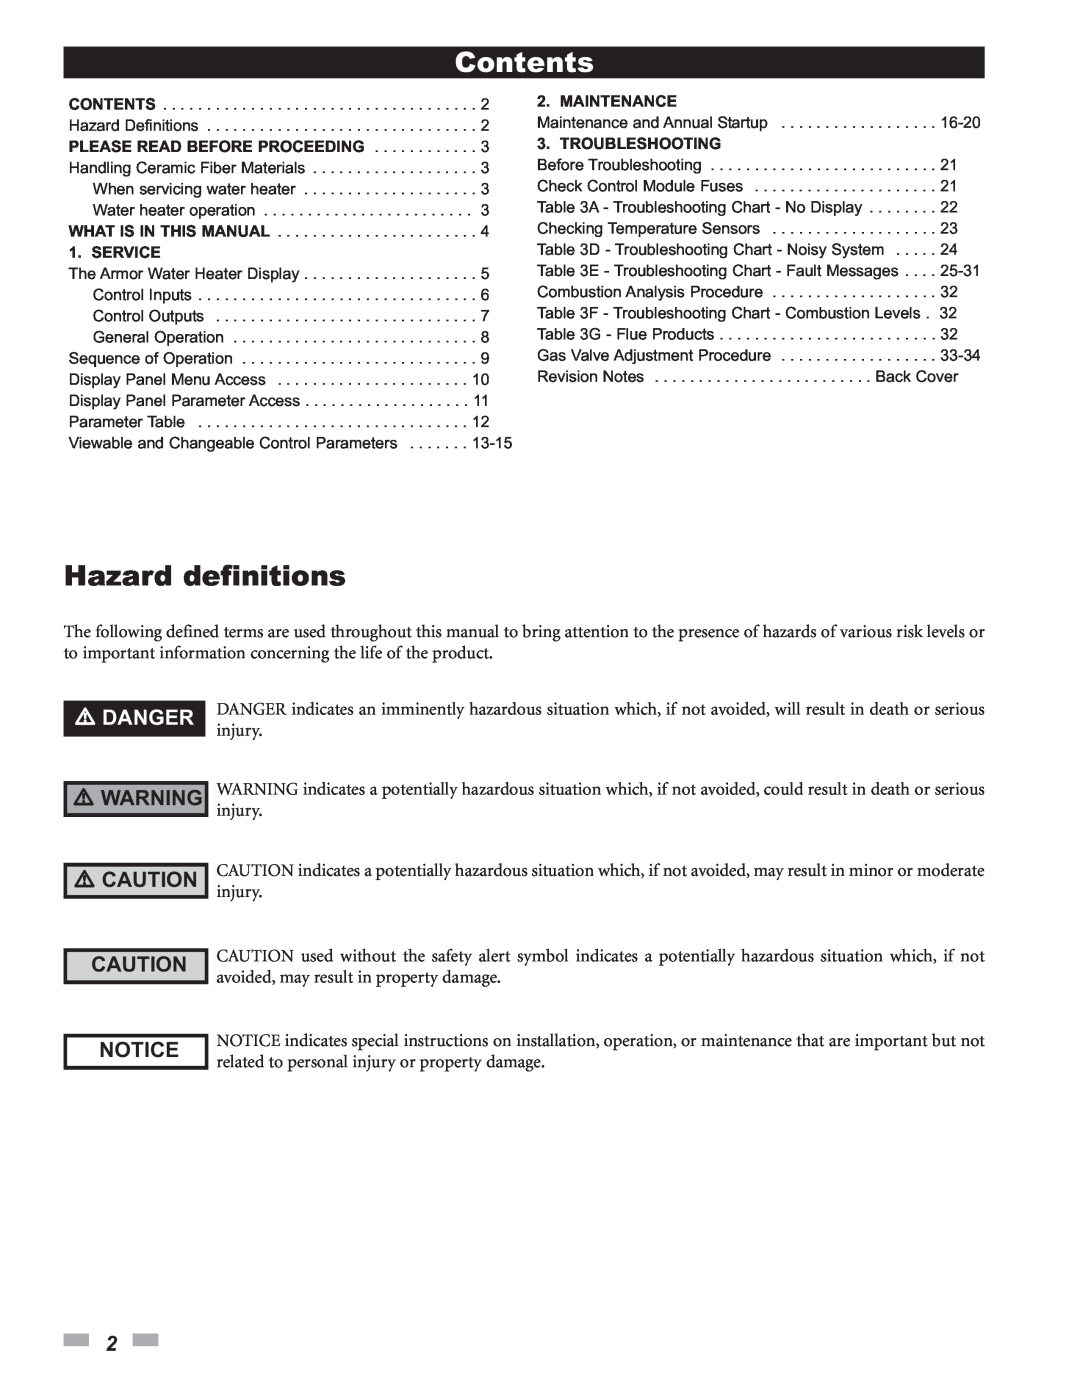 Lochinvar 150 - 800 service manual Hazard definitions, Danger, Contents 